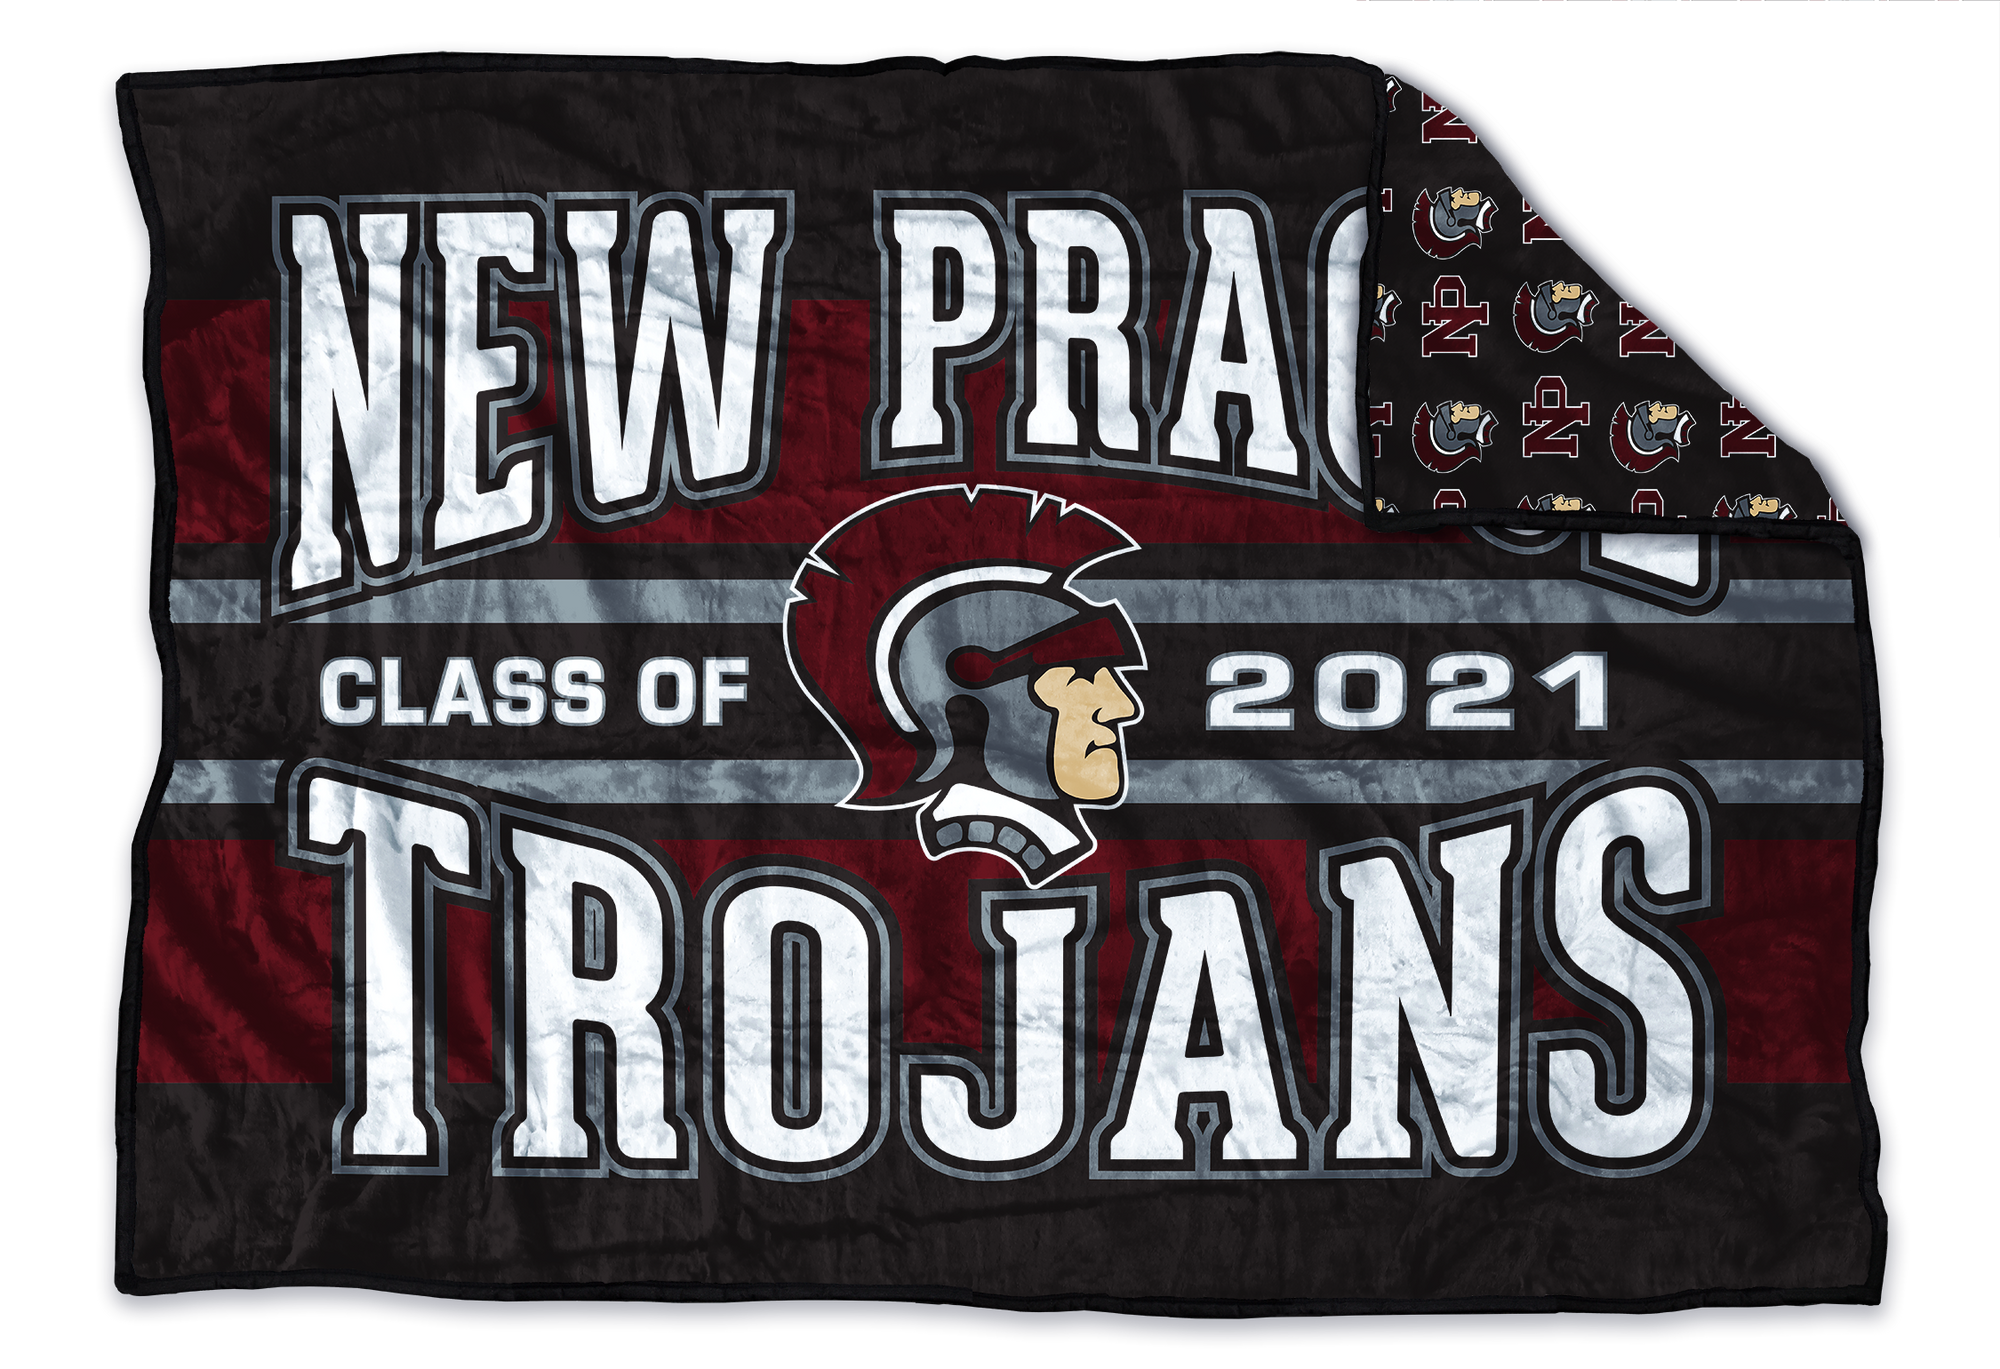 New Prague Trojans Sr. 2021